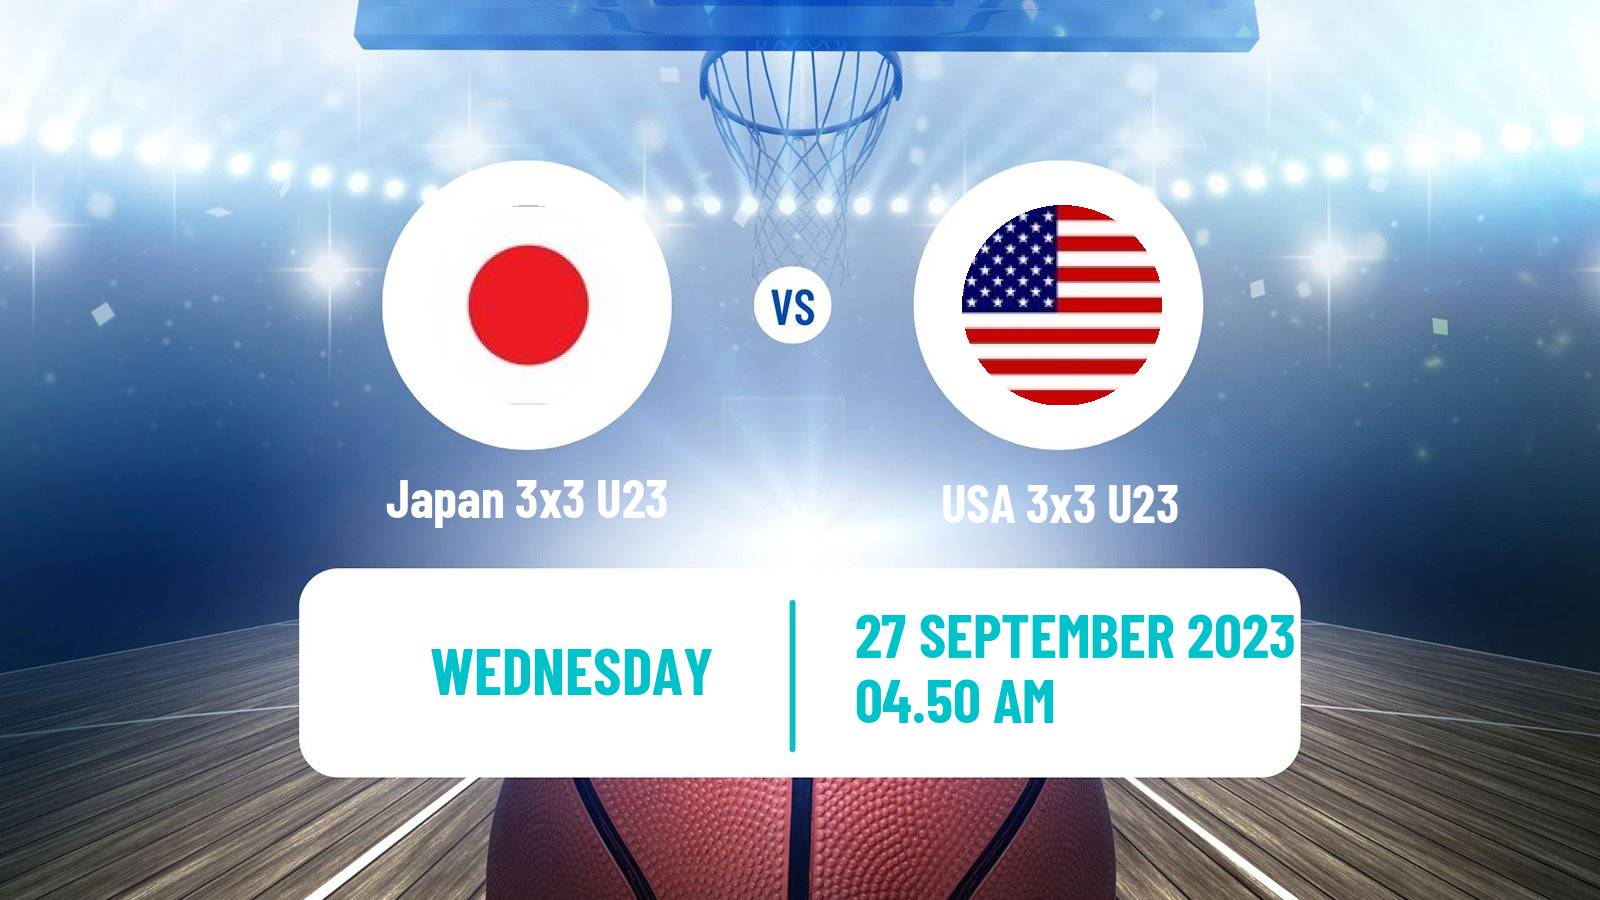 Basketball World Cup Basketball 3x3 U23 Japan 3x3 U23 - USA 3x3 U23